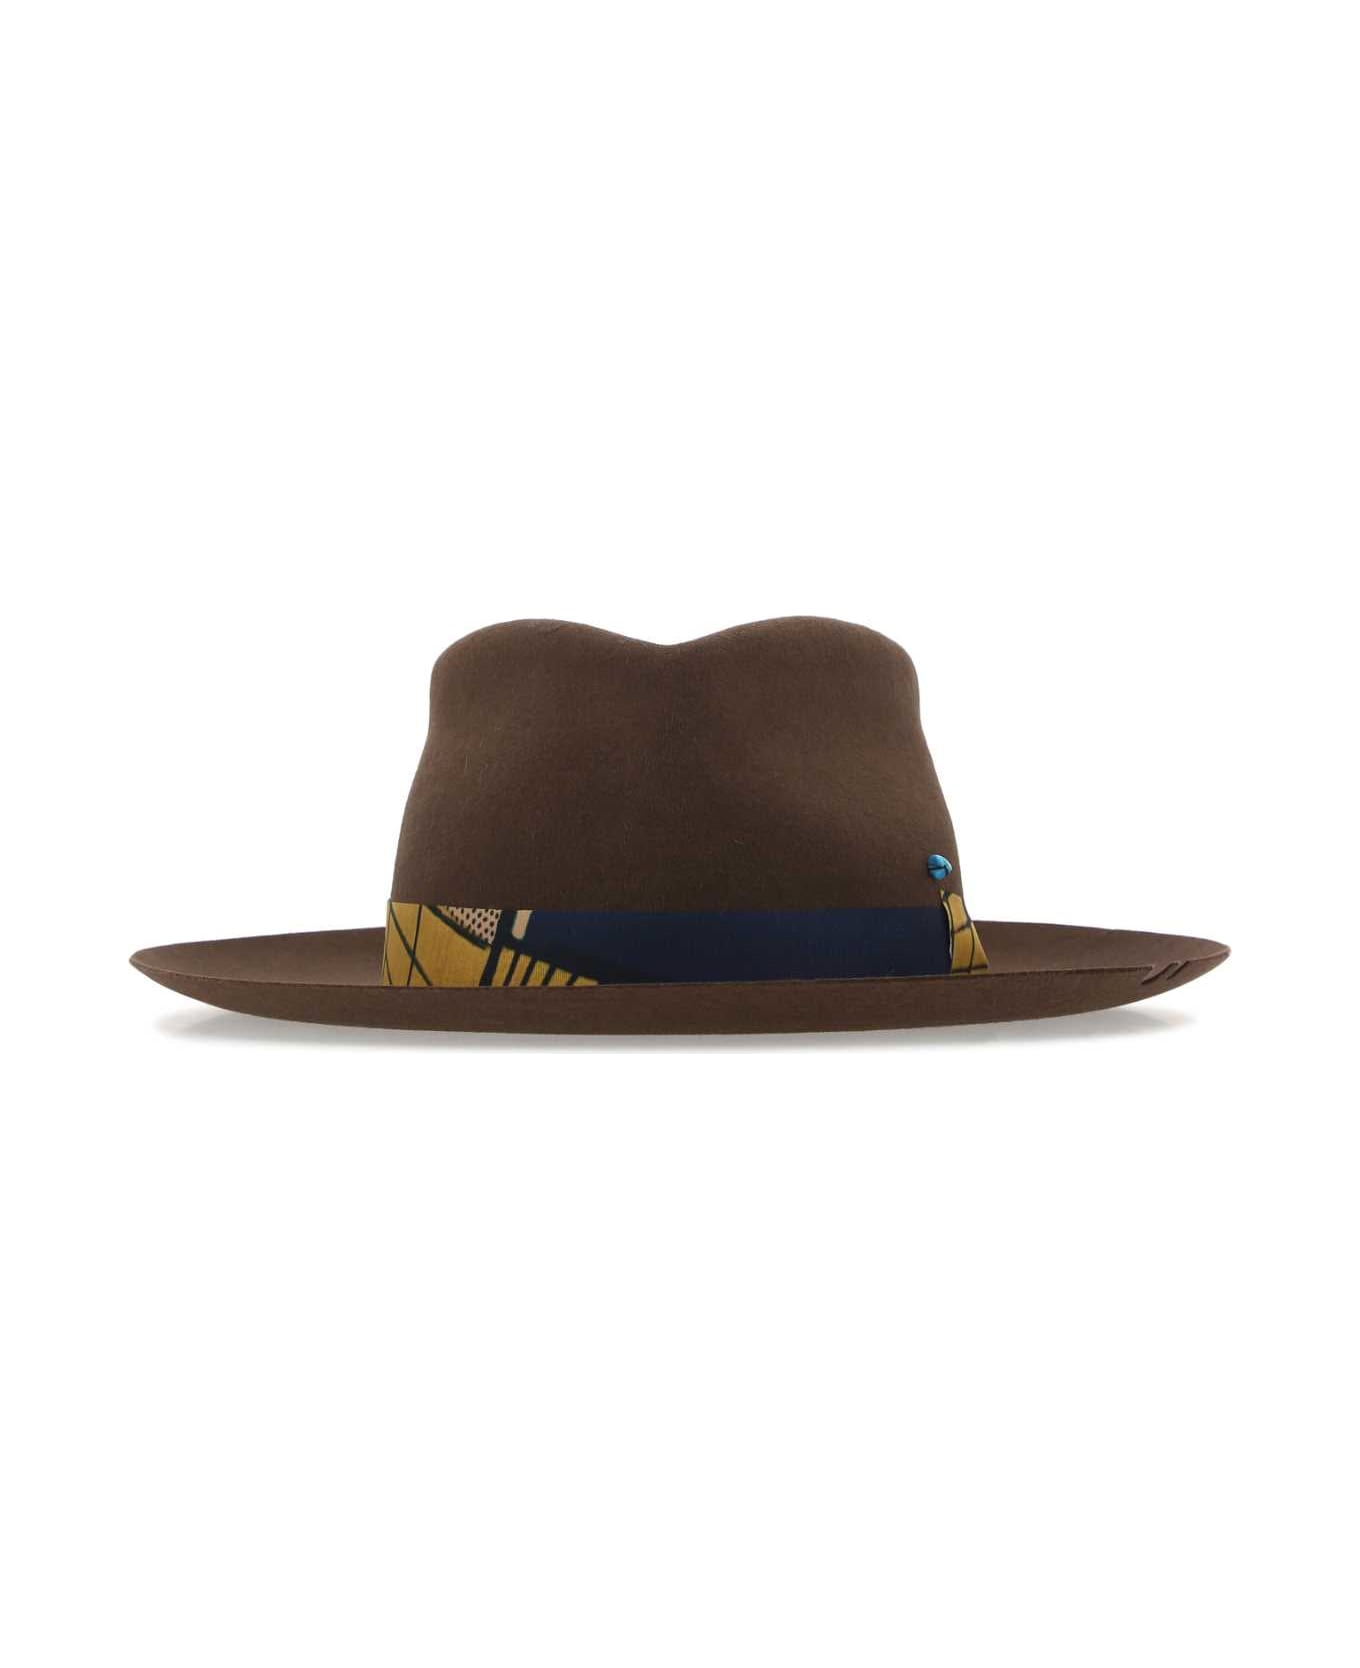 Super Duper Hats Brown Felt Bouganville Hat - TERRA 帽子